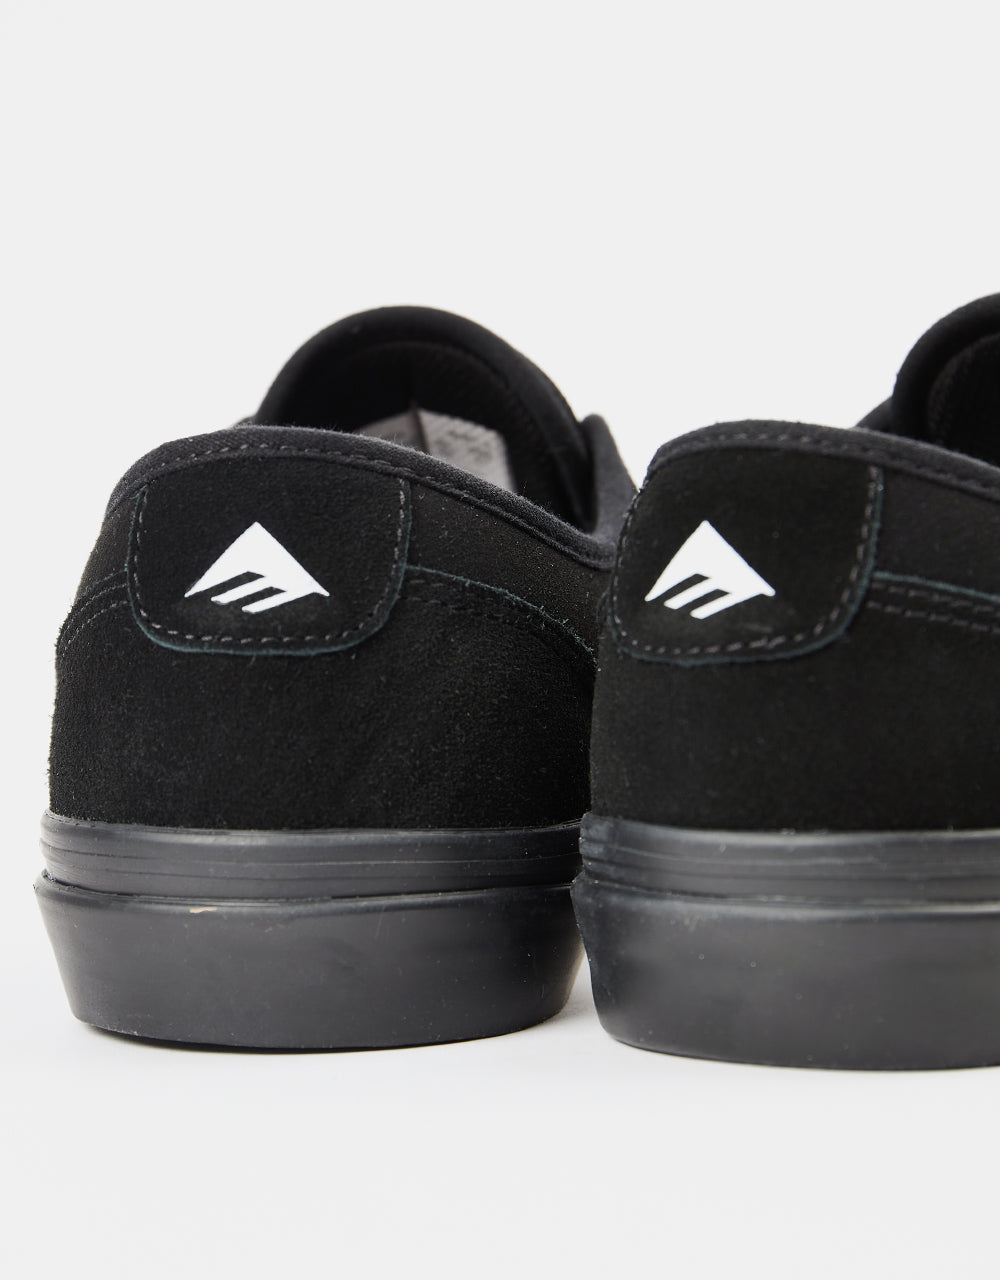 Emerica Provost G6 Skate Shoes - Black/Black/Black